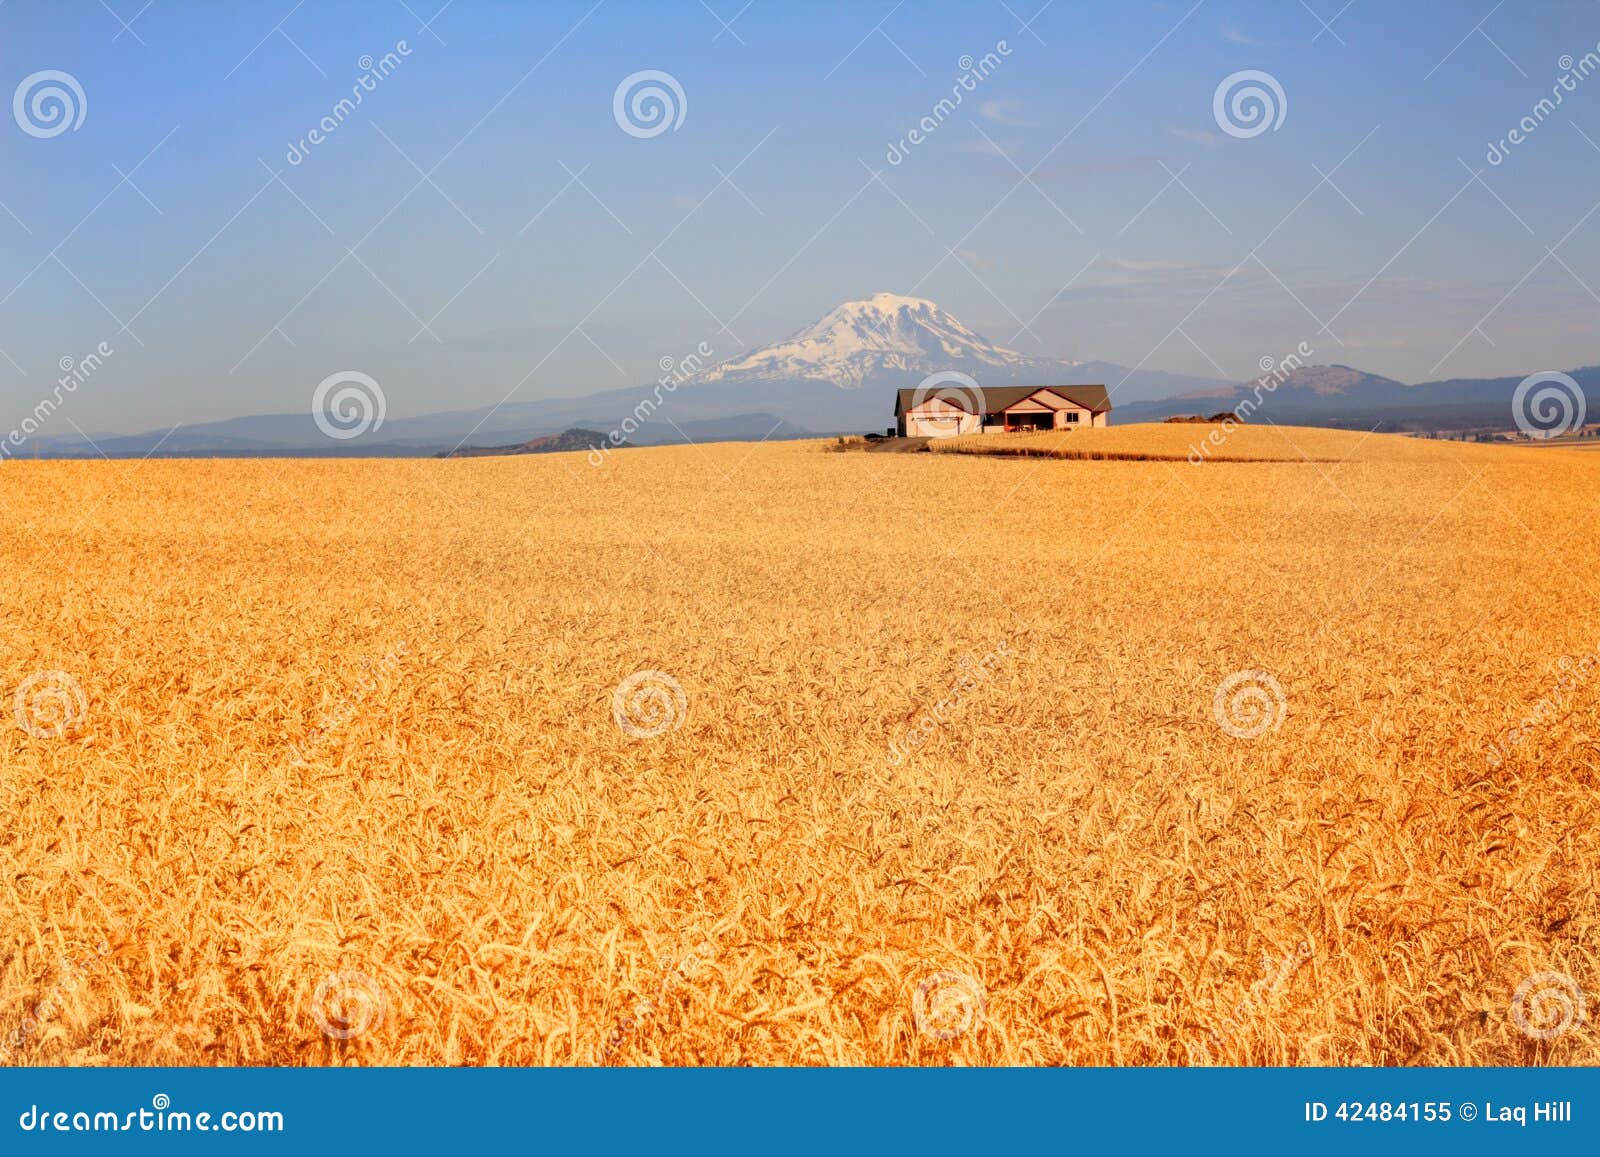 vast wheat field